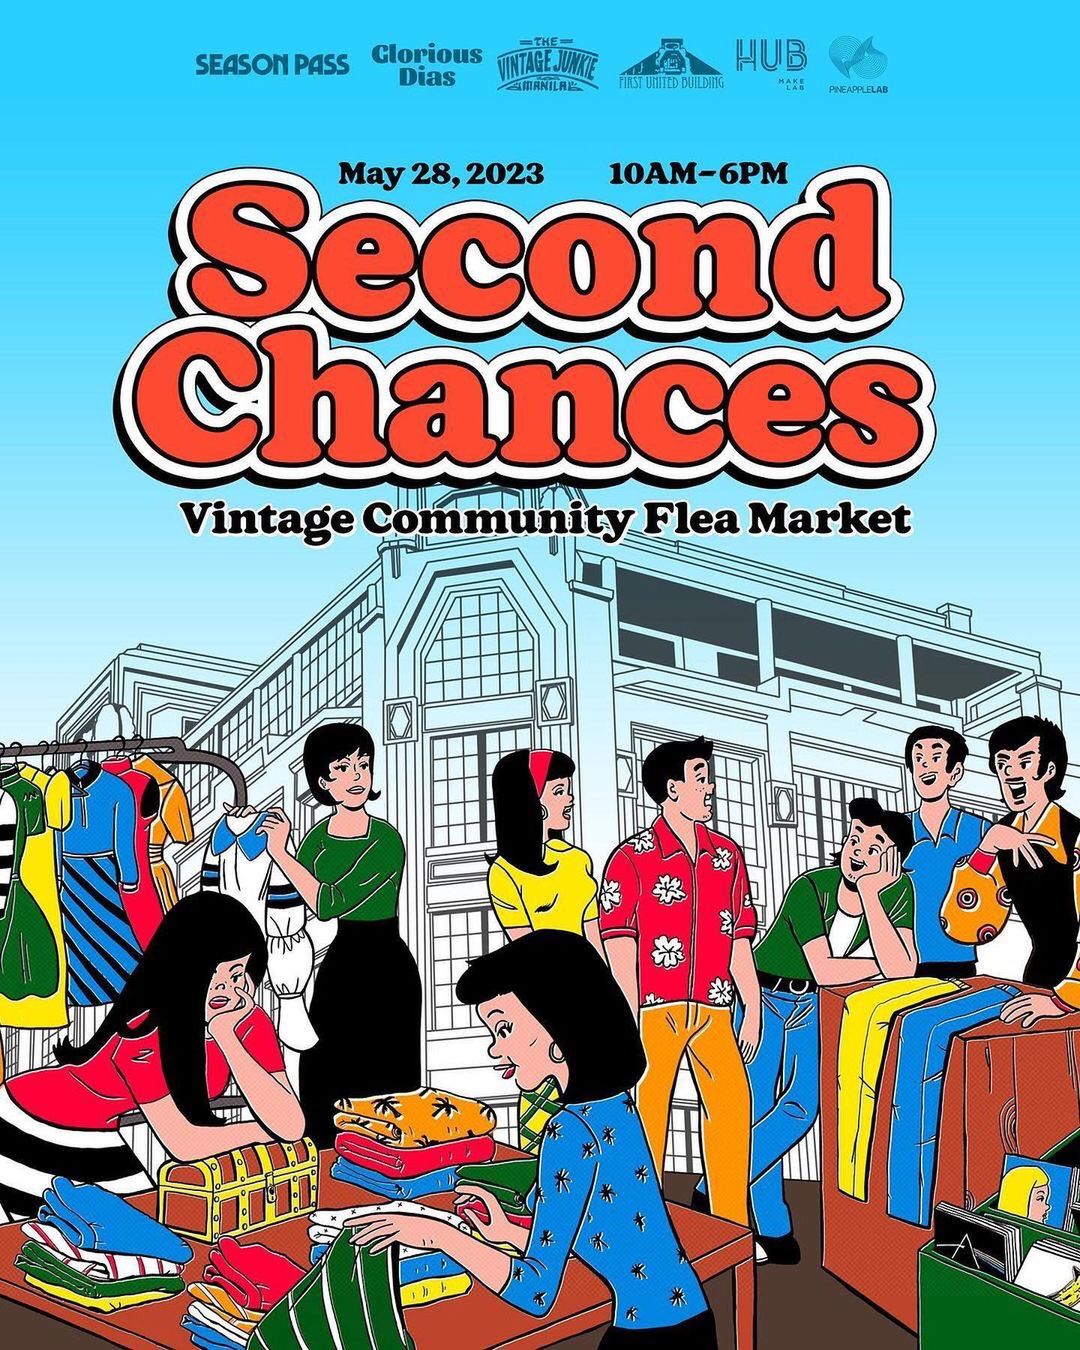 Vintage Flea Market Escolta - SECOND CHANCES Vintage Community Flea Market